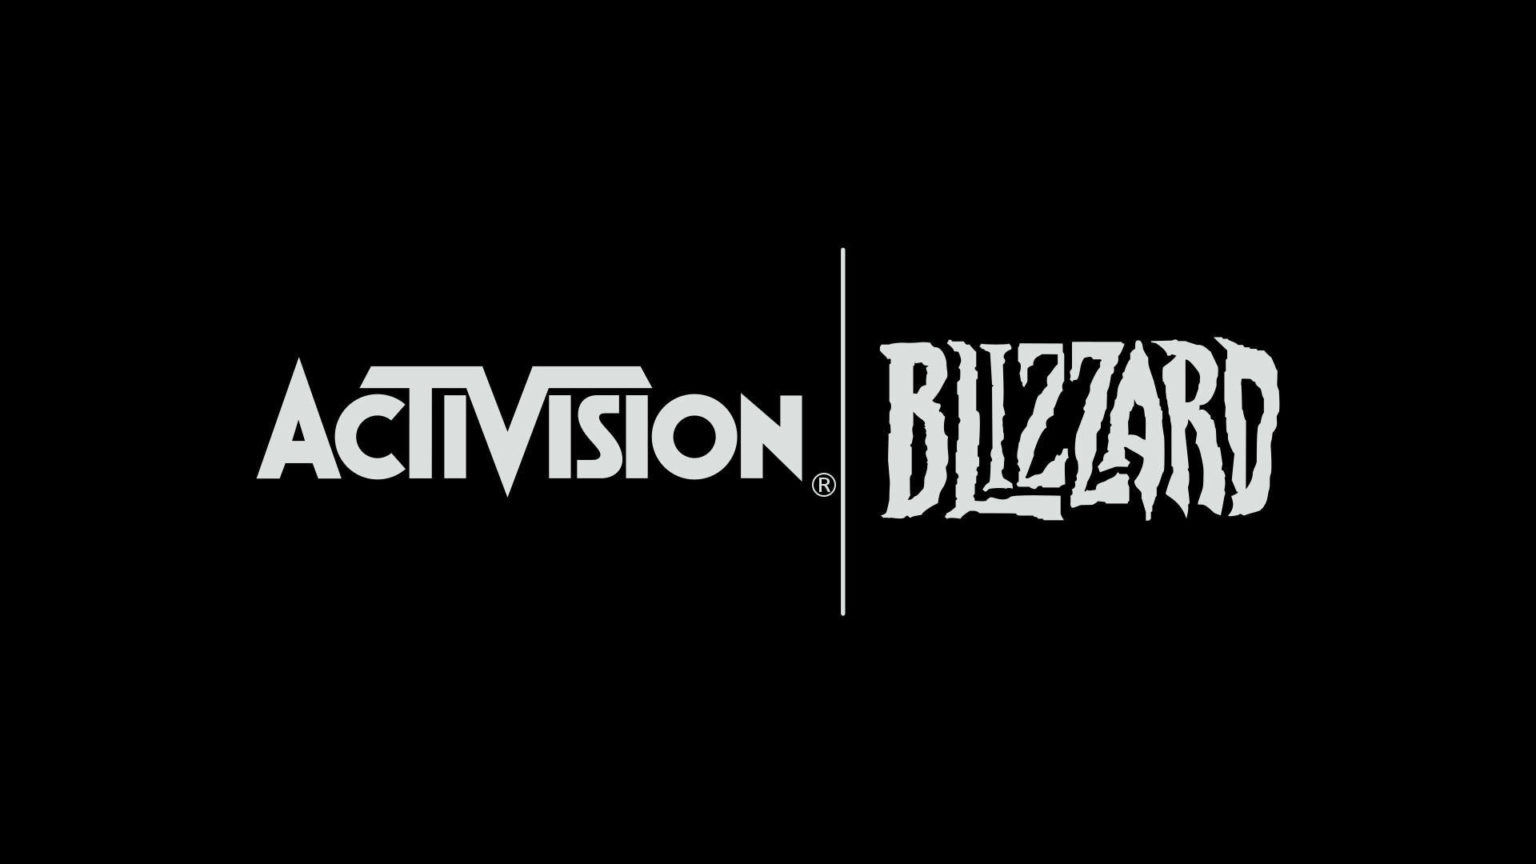 activision blizzard logo 18809 1536x864 1